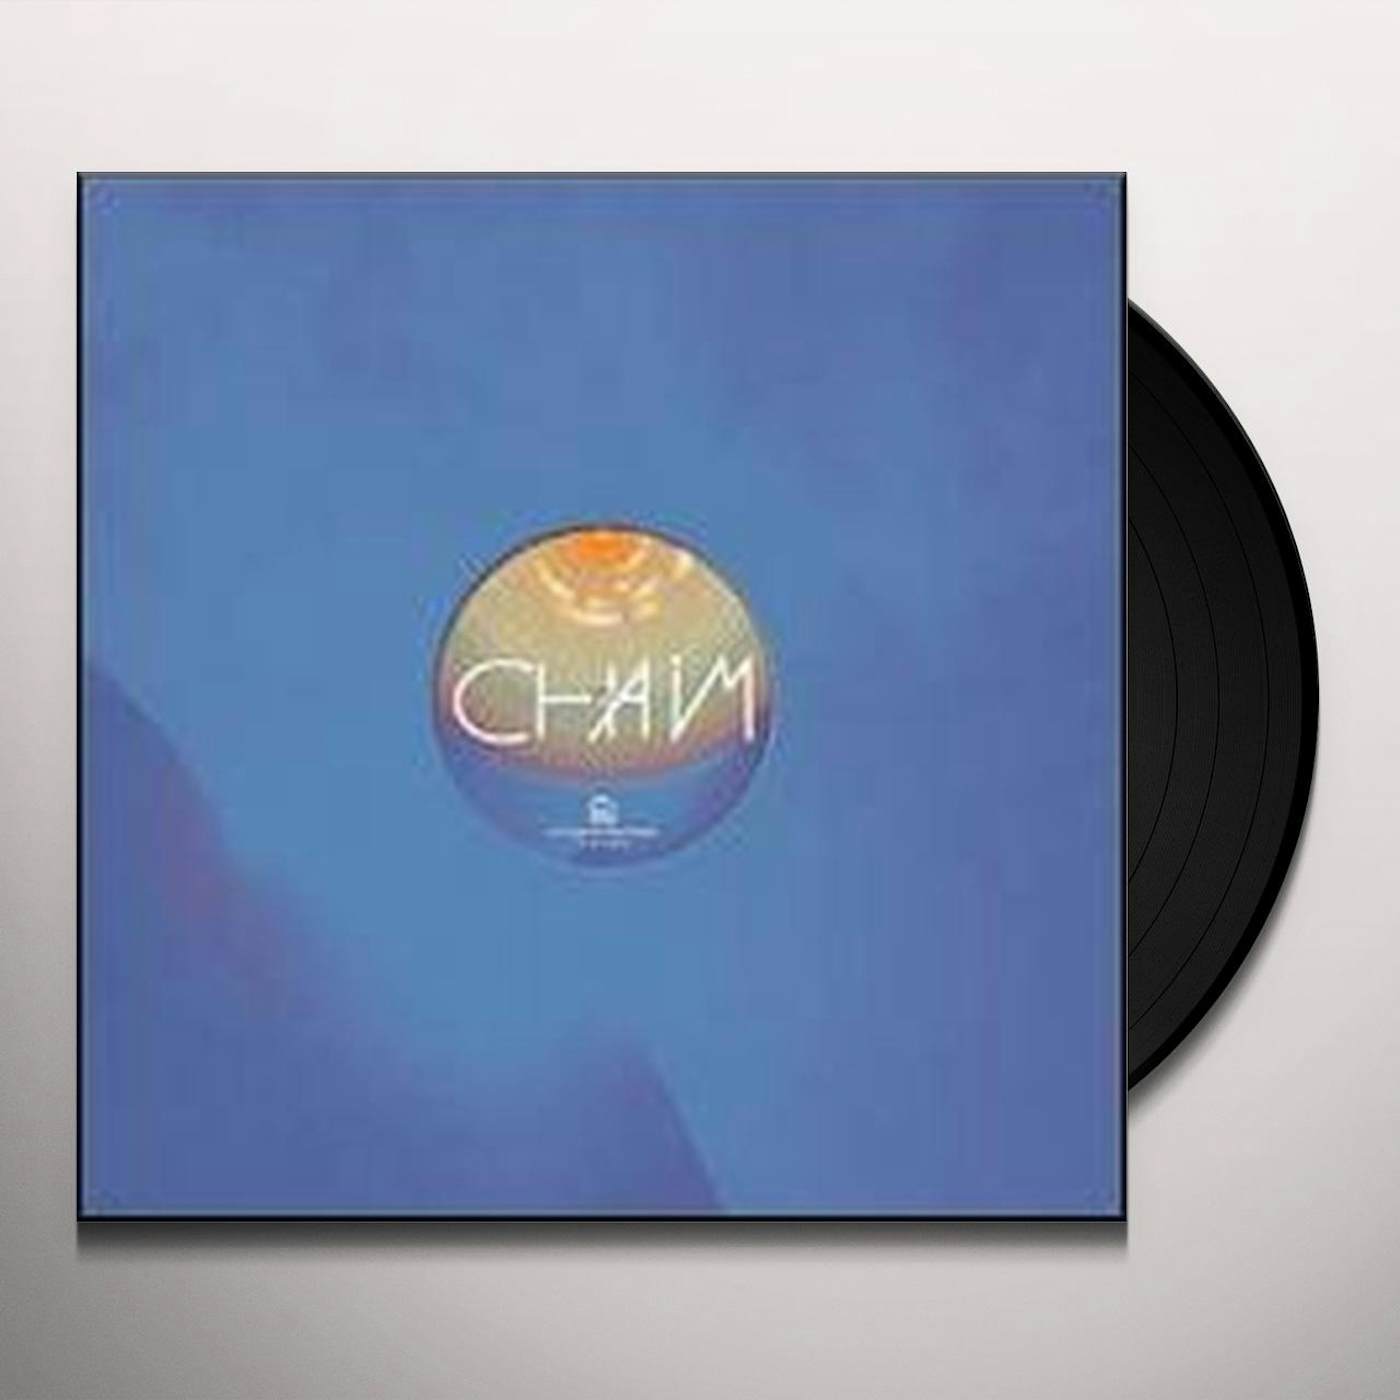 Chaim U & Eye Vinyl Record